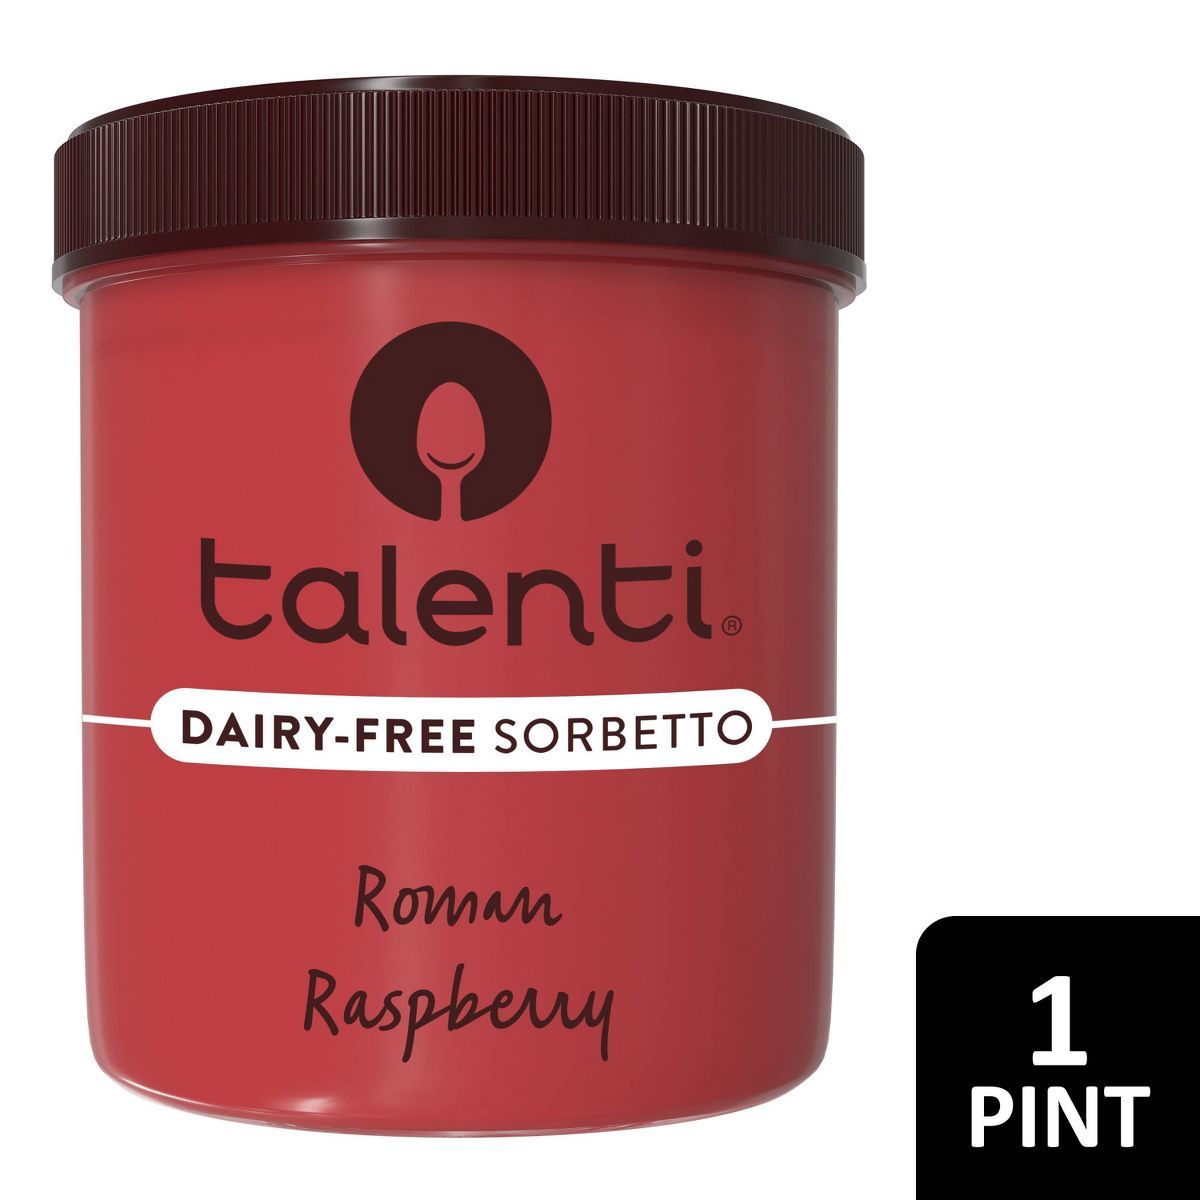 Talenti Dairy-Free Frozen Roman Raspberry Sorbetto - 16oz | Target